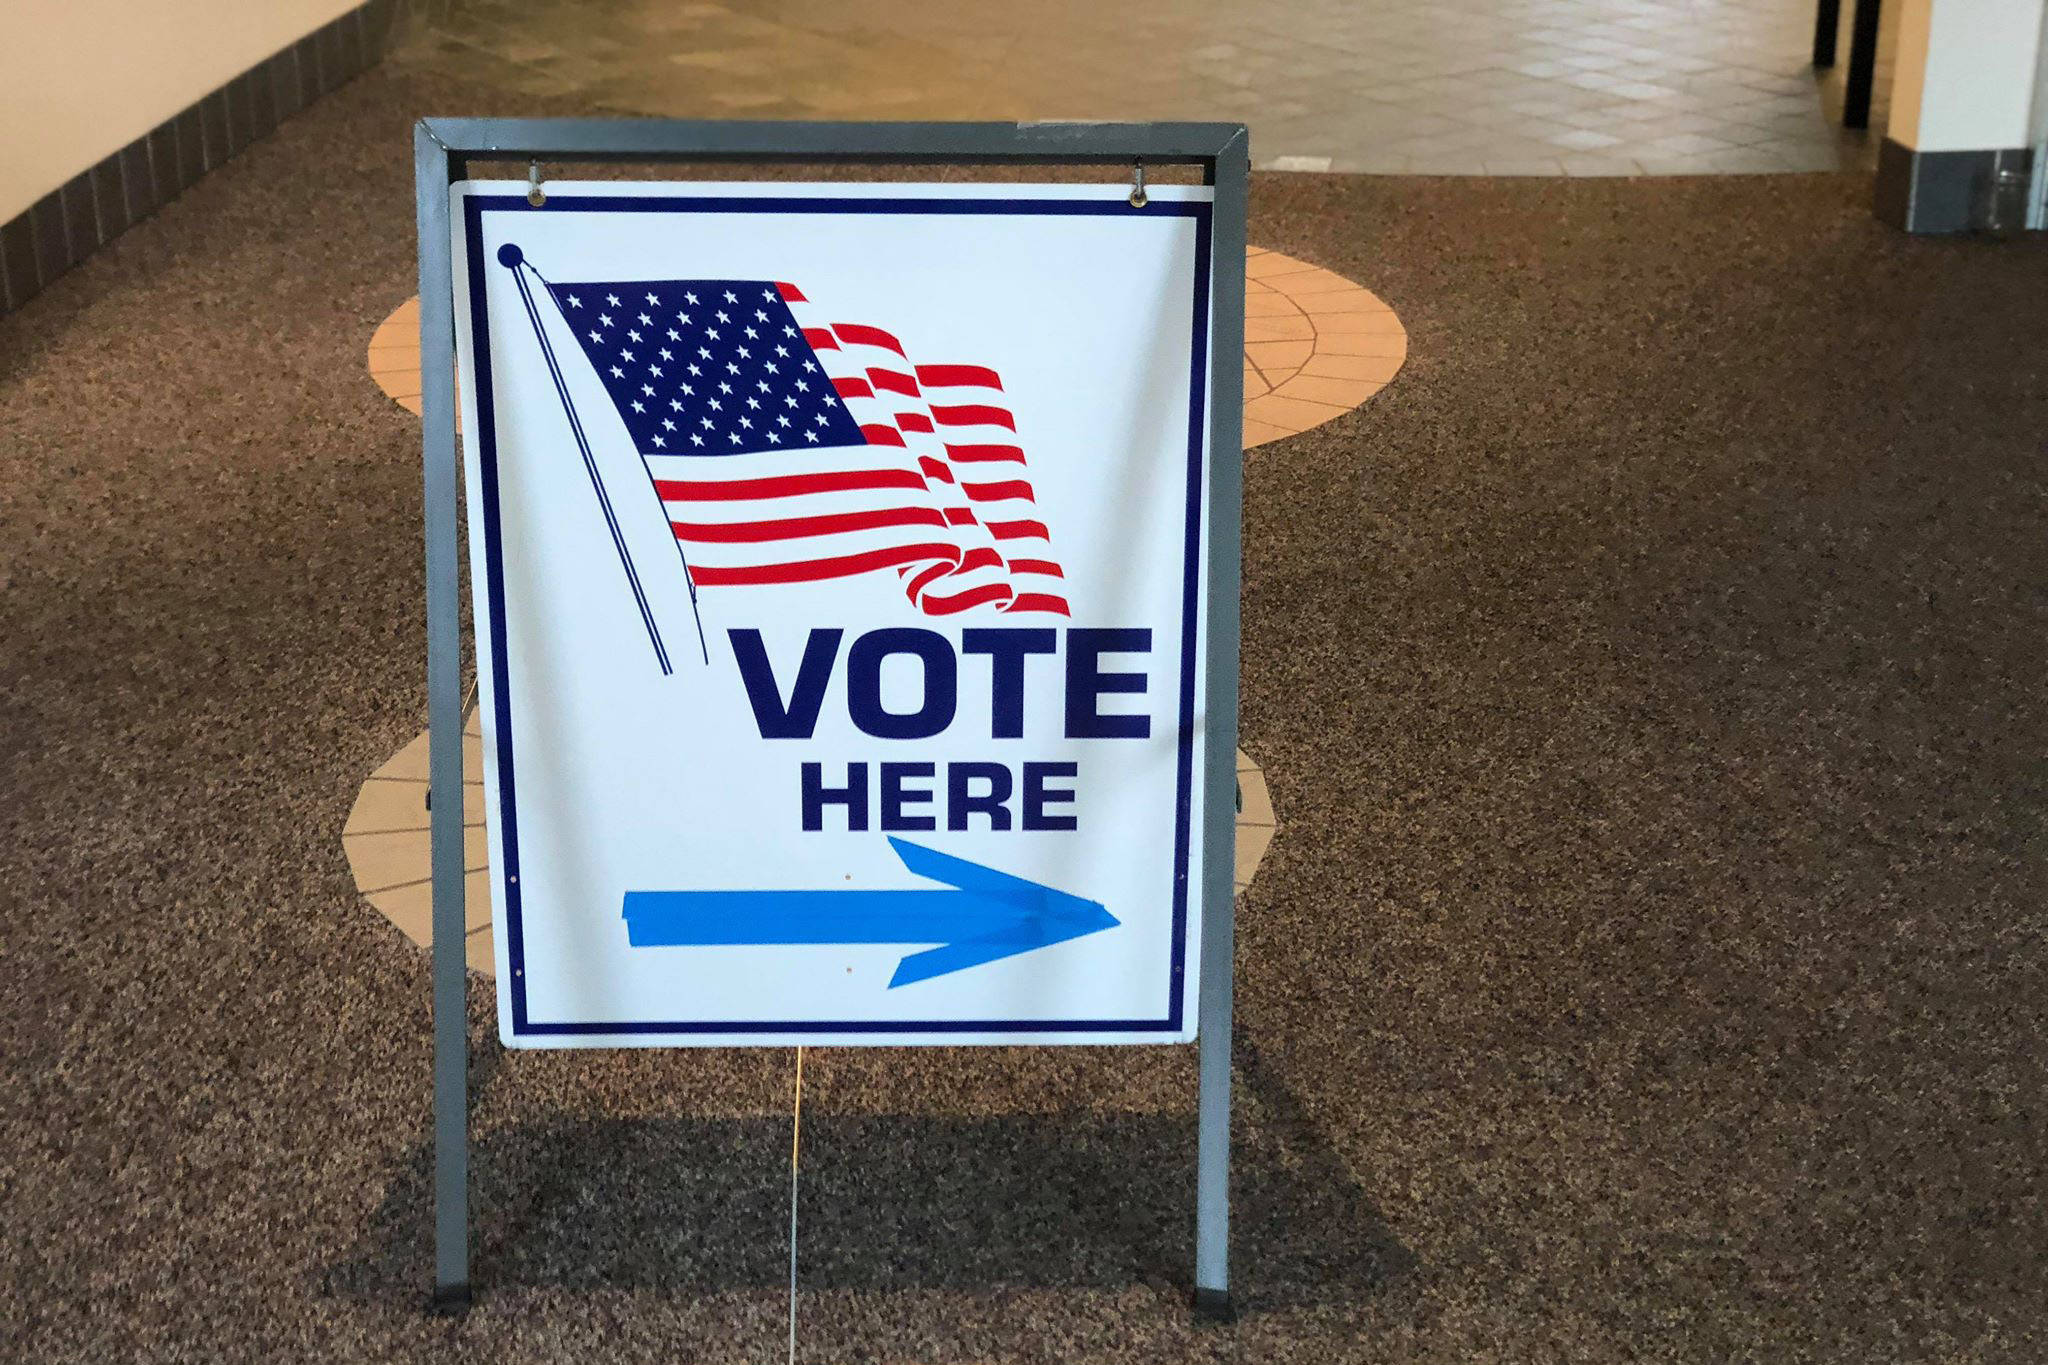 Borough seeks to increase voter turnout through election stakeholder group